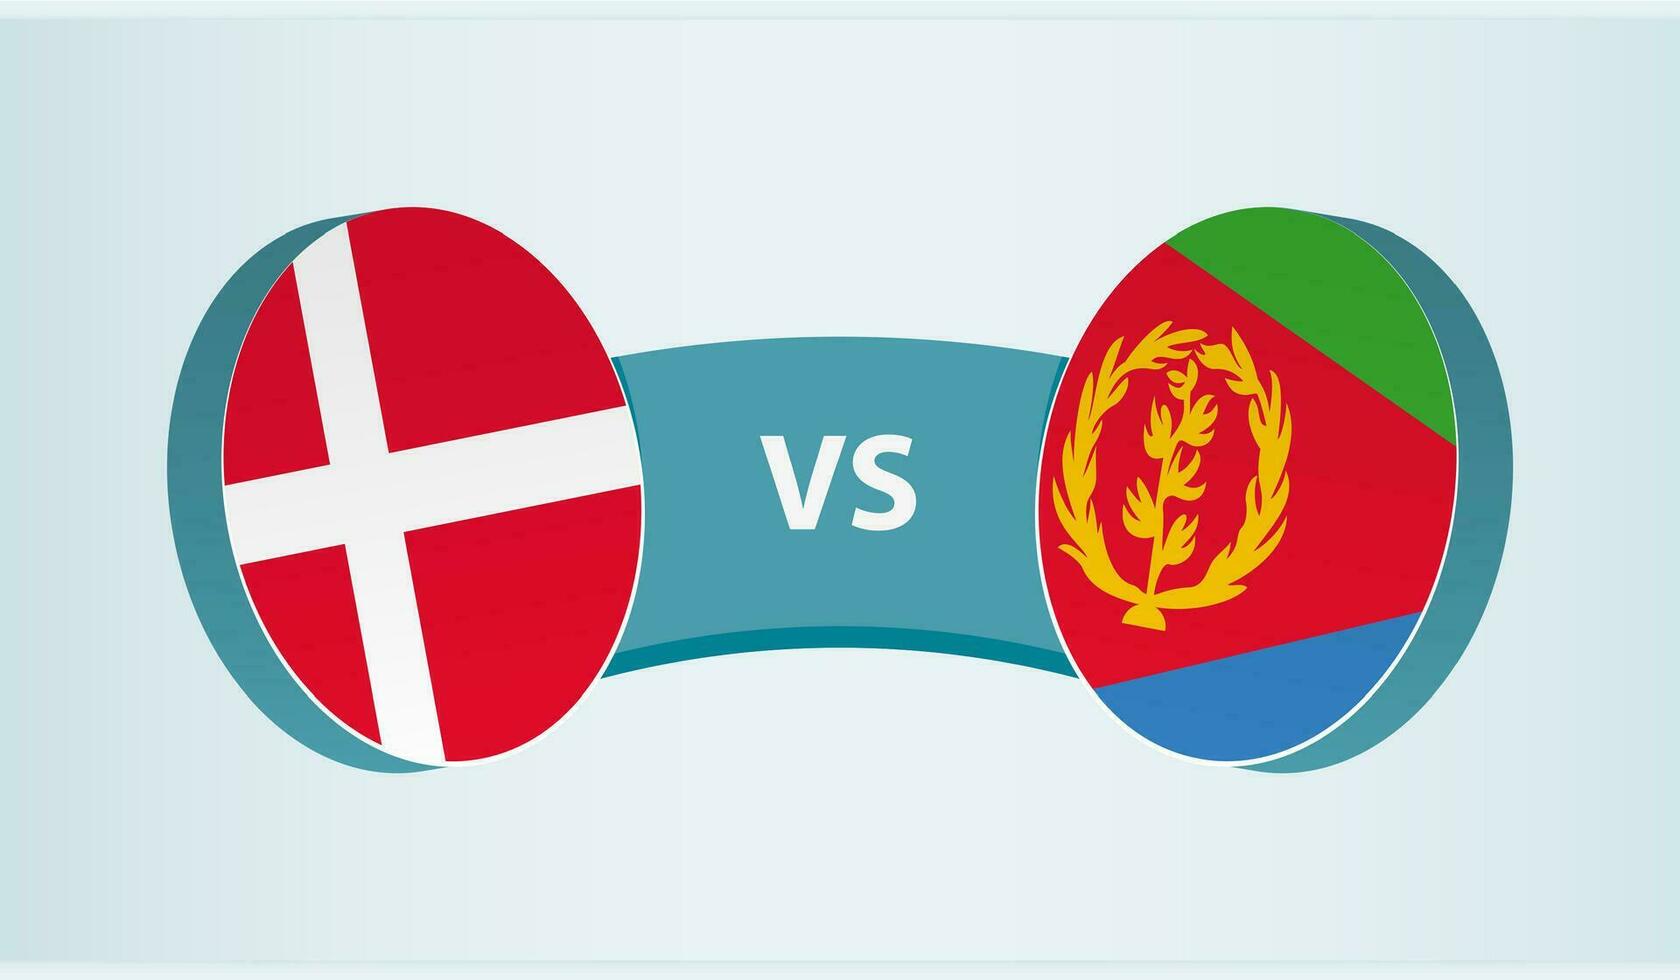 Denmark versus Eritrea, team sports competition concept. vector